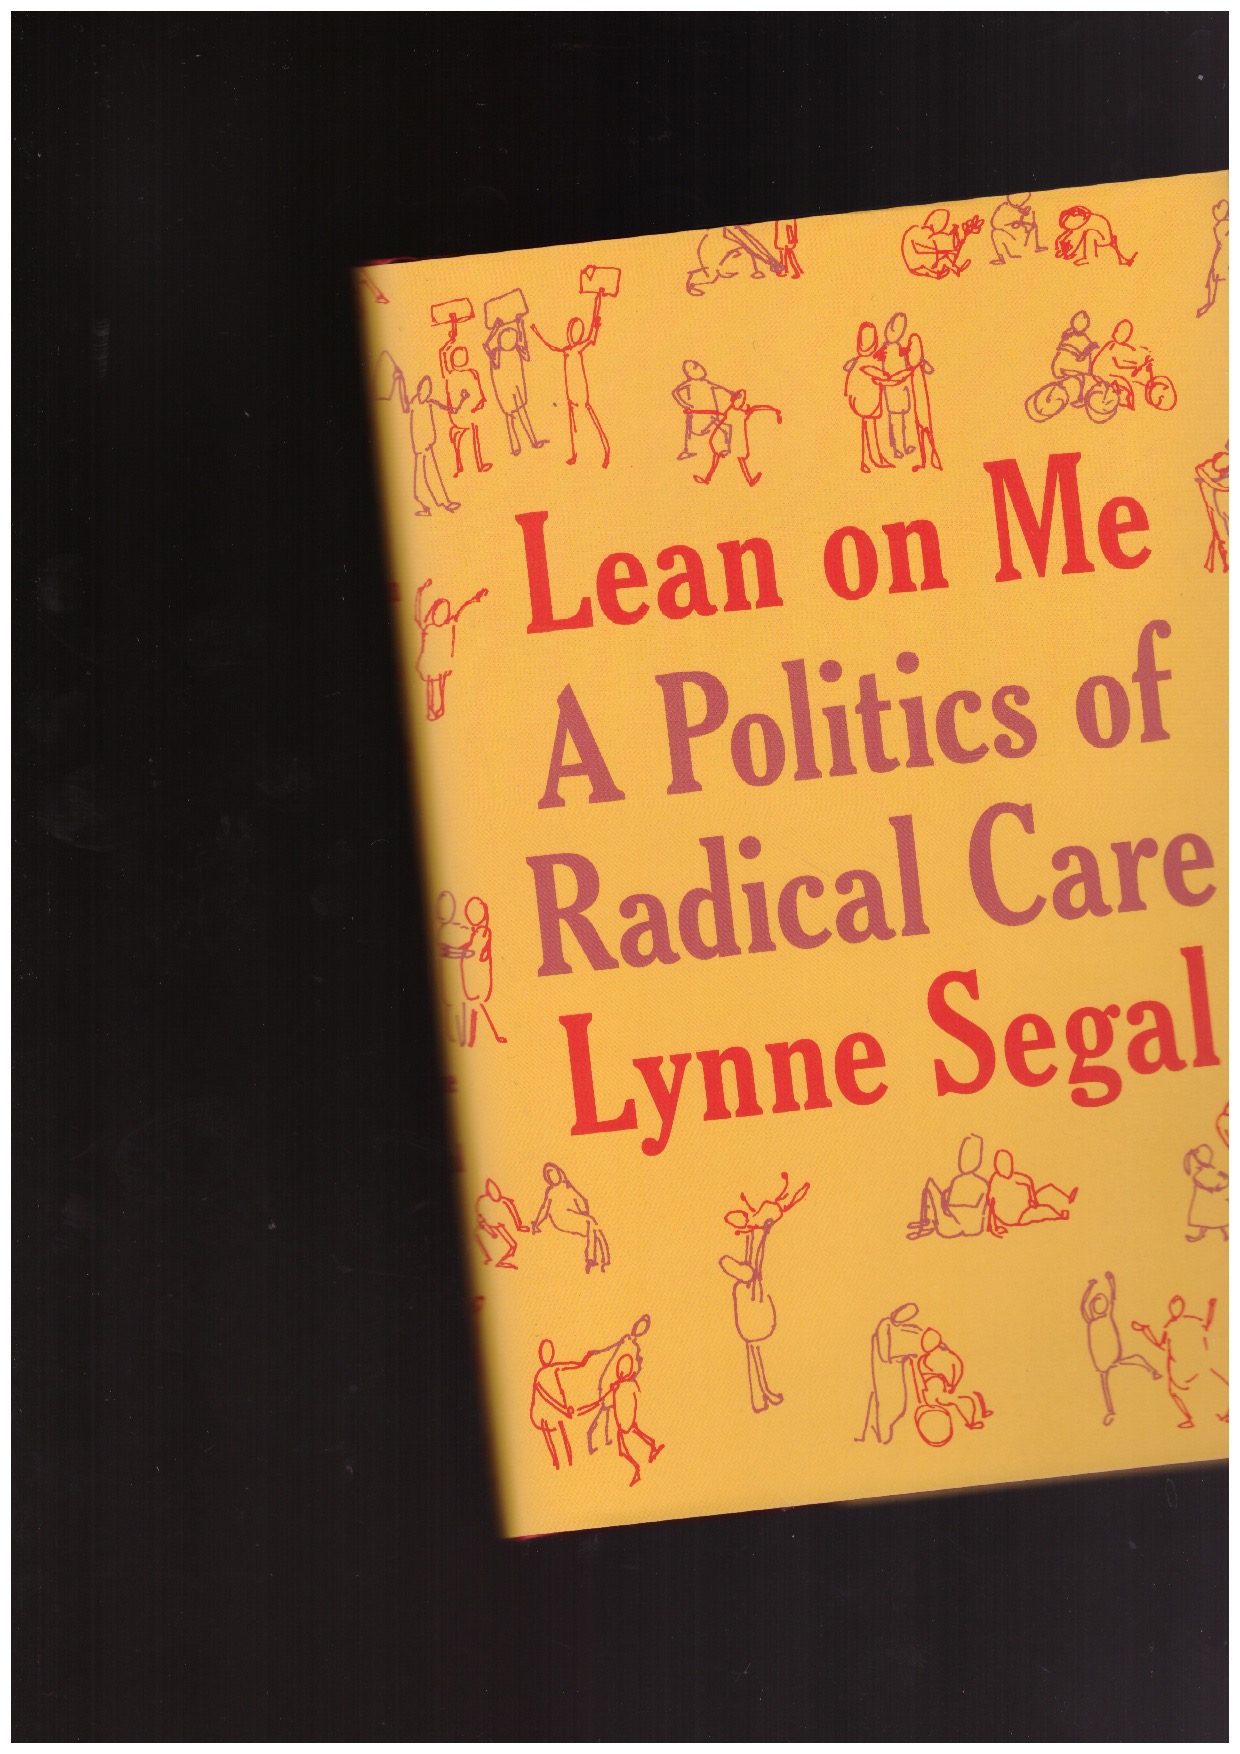 SEGAL, Lynne - Lean on Me: A Politics of Radical Care